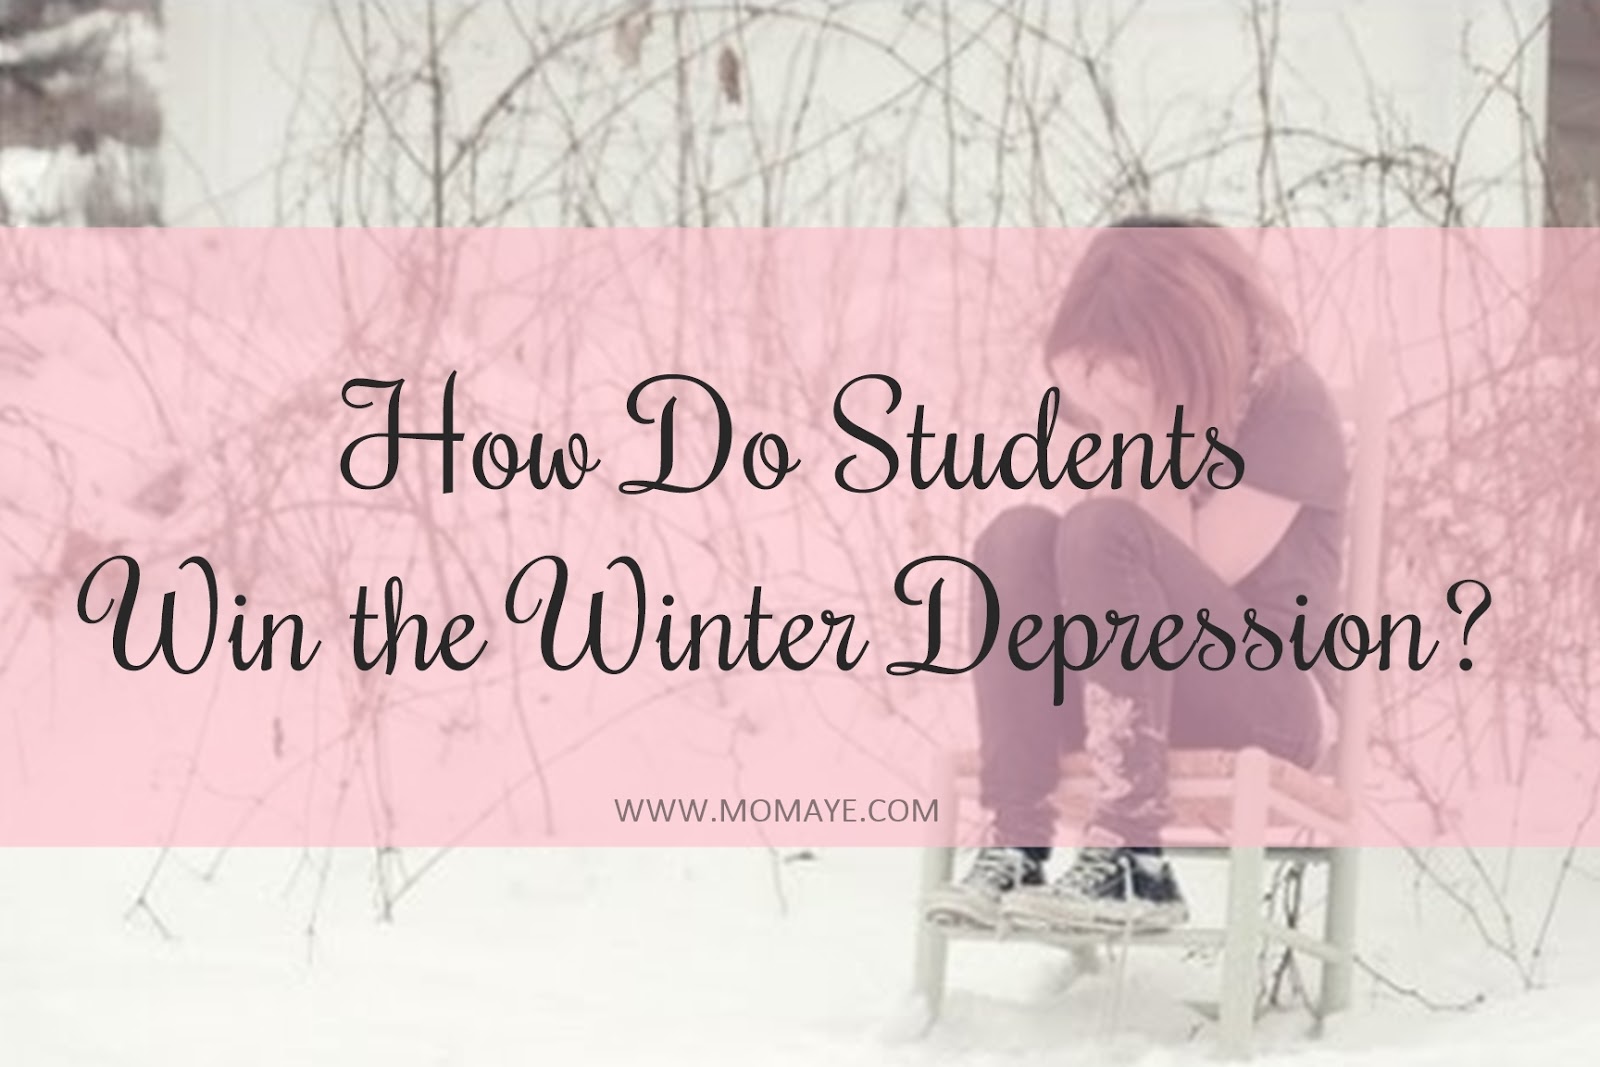 winter depression essay